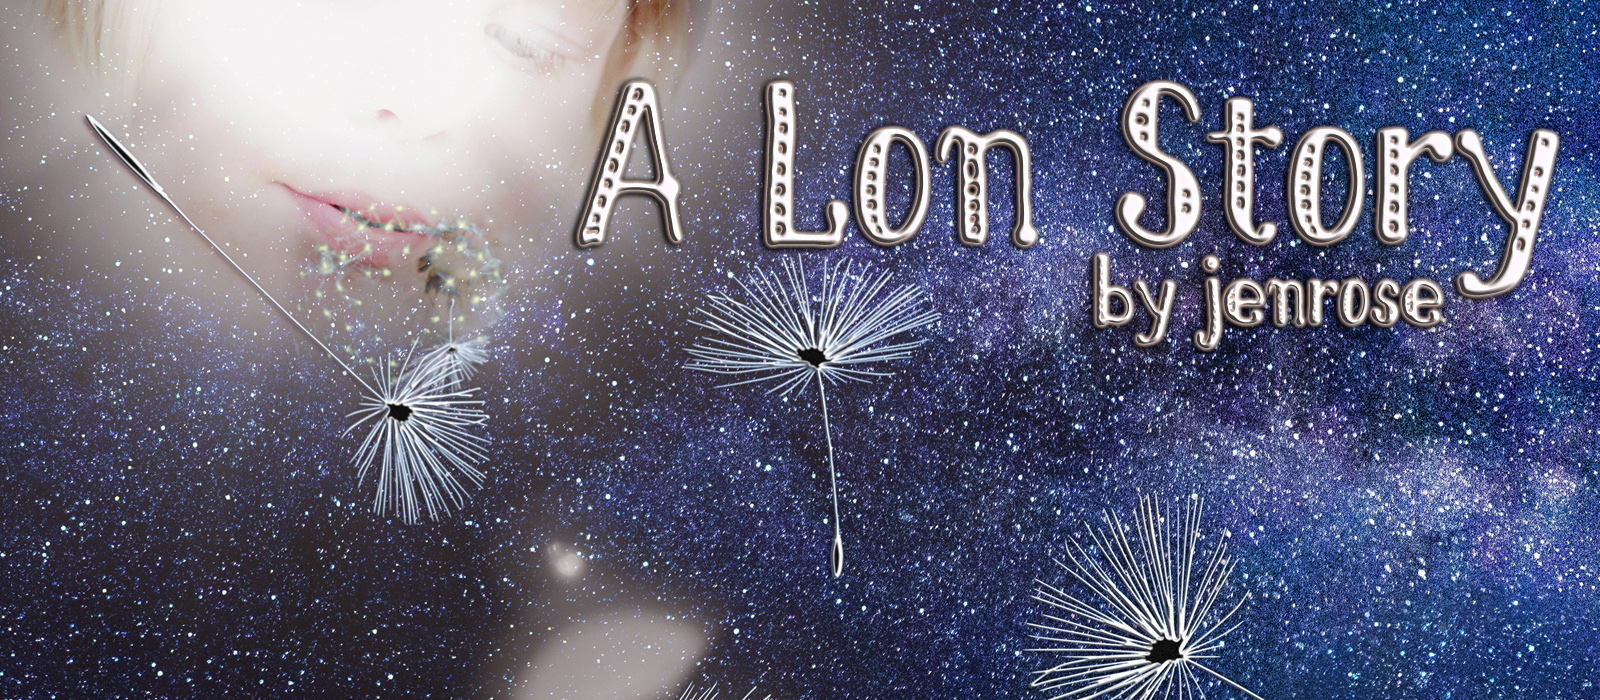 An anthropmoprhized sun blows metallic dandelion seeds across the stars